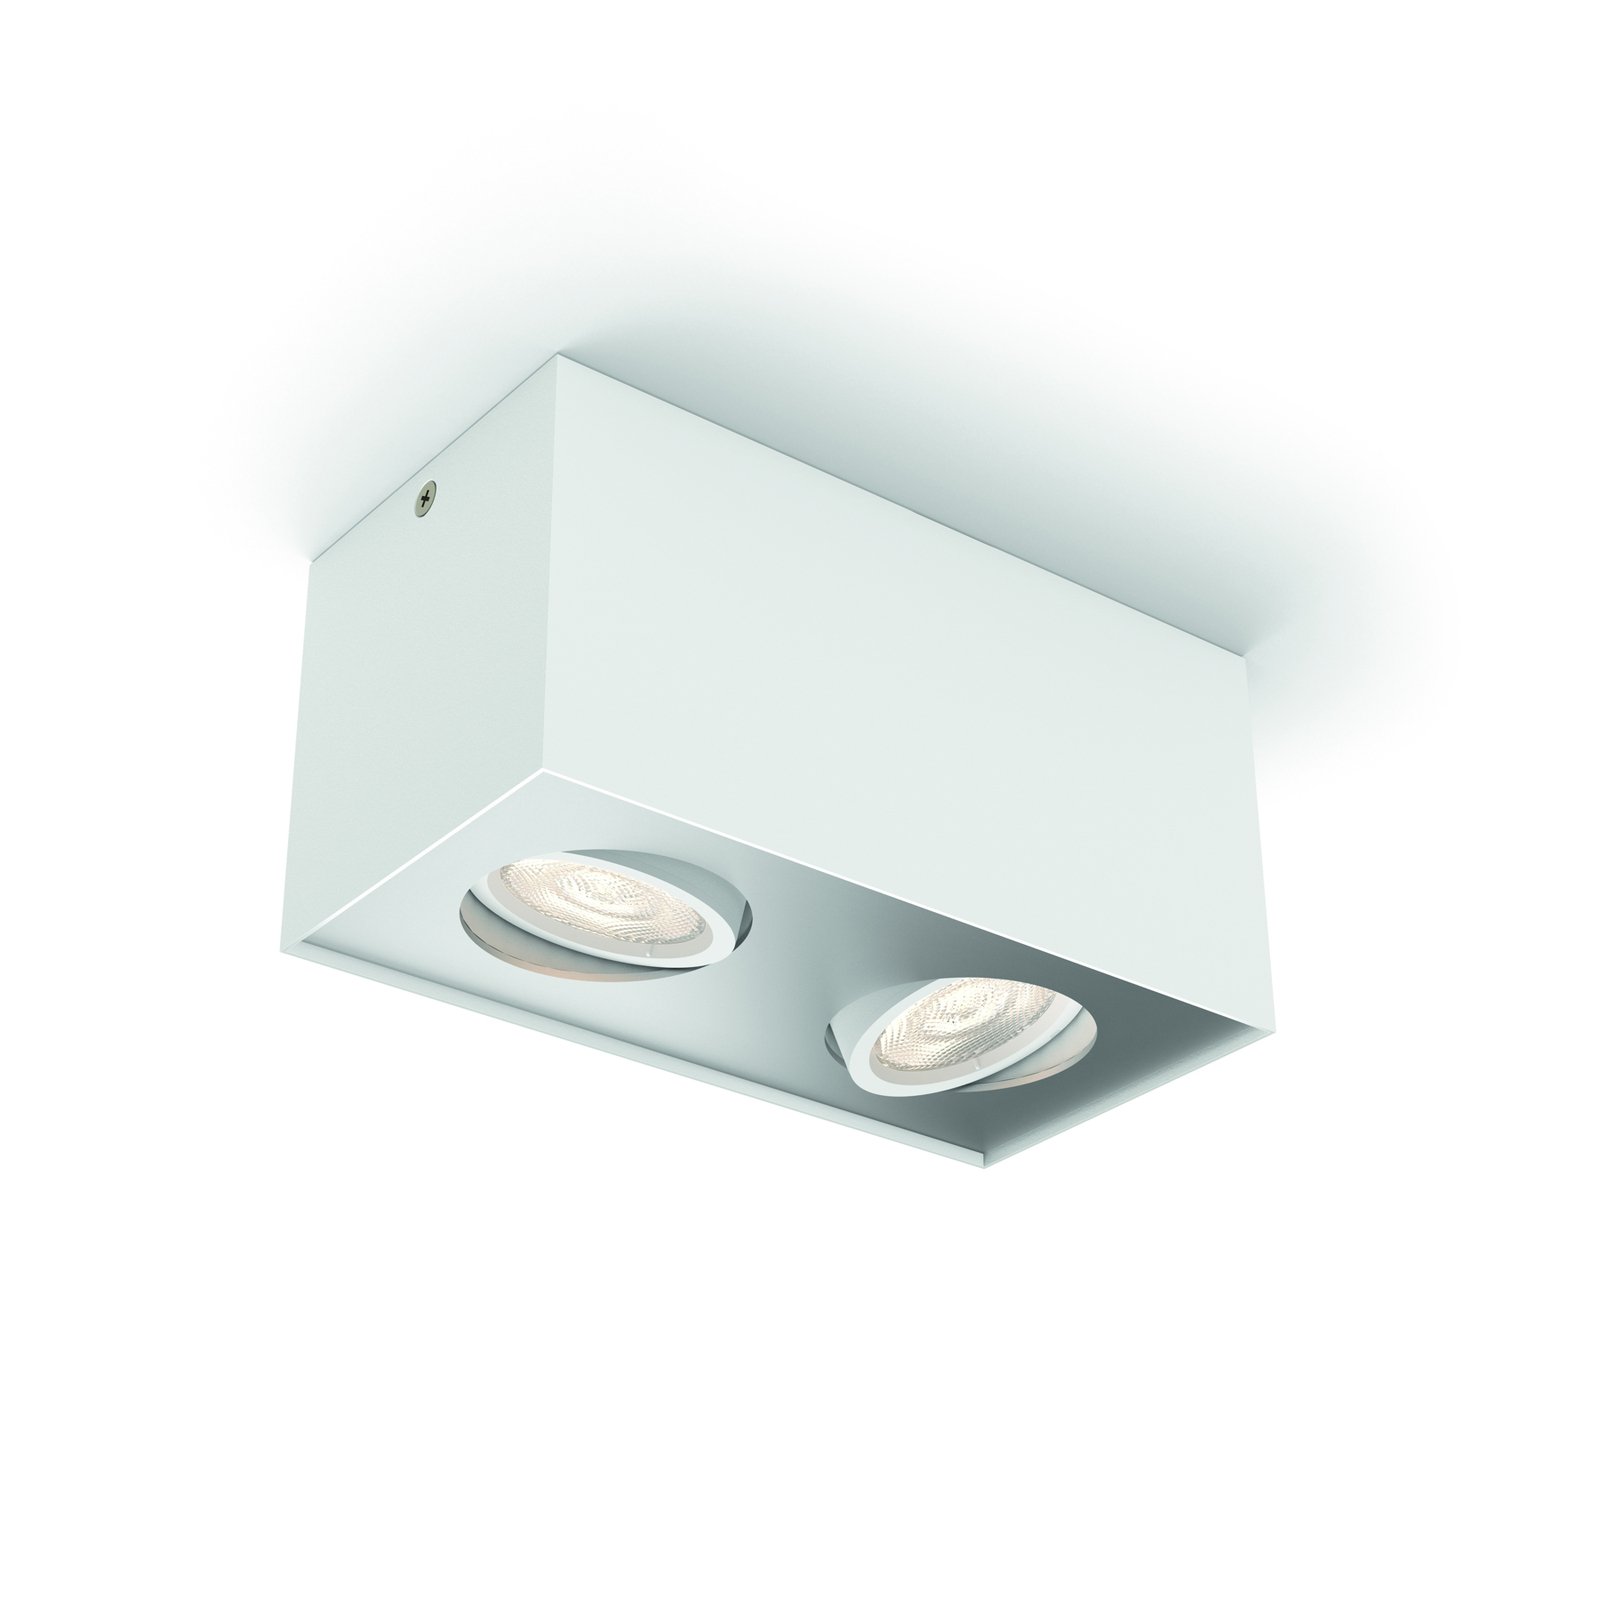 Philips myLiving Box LED-spot, 2 lyskilder, hvidt